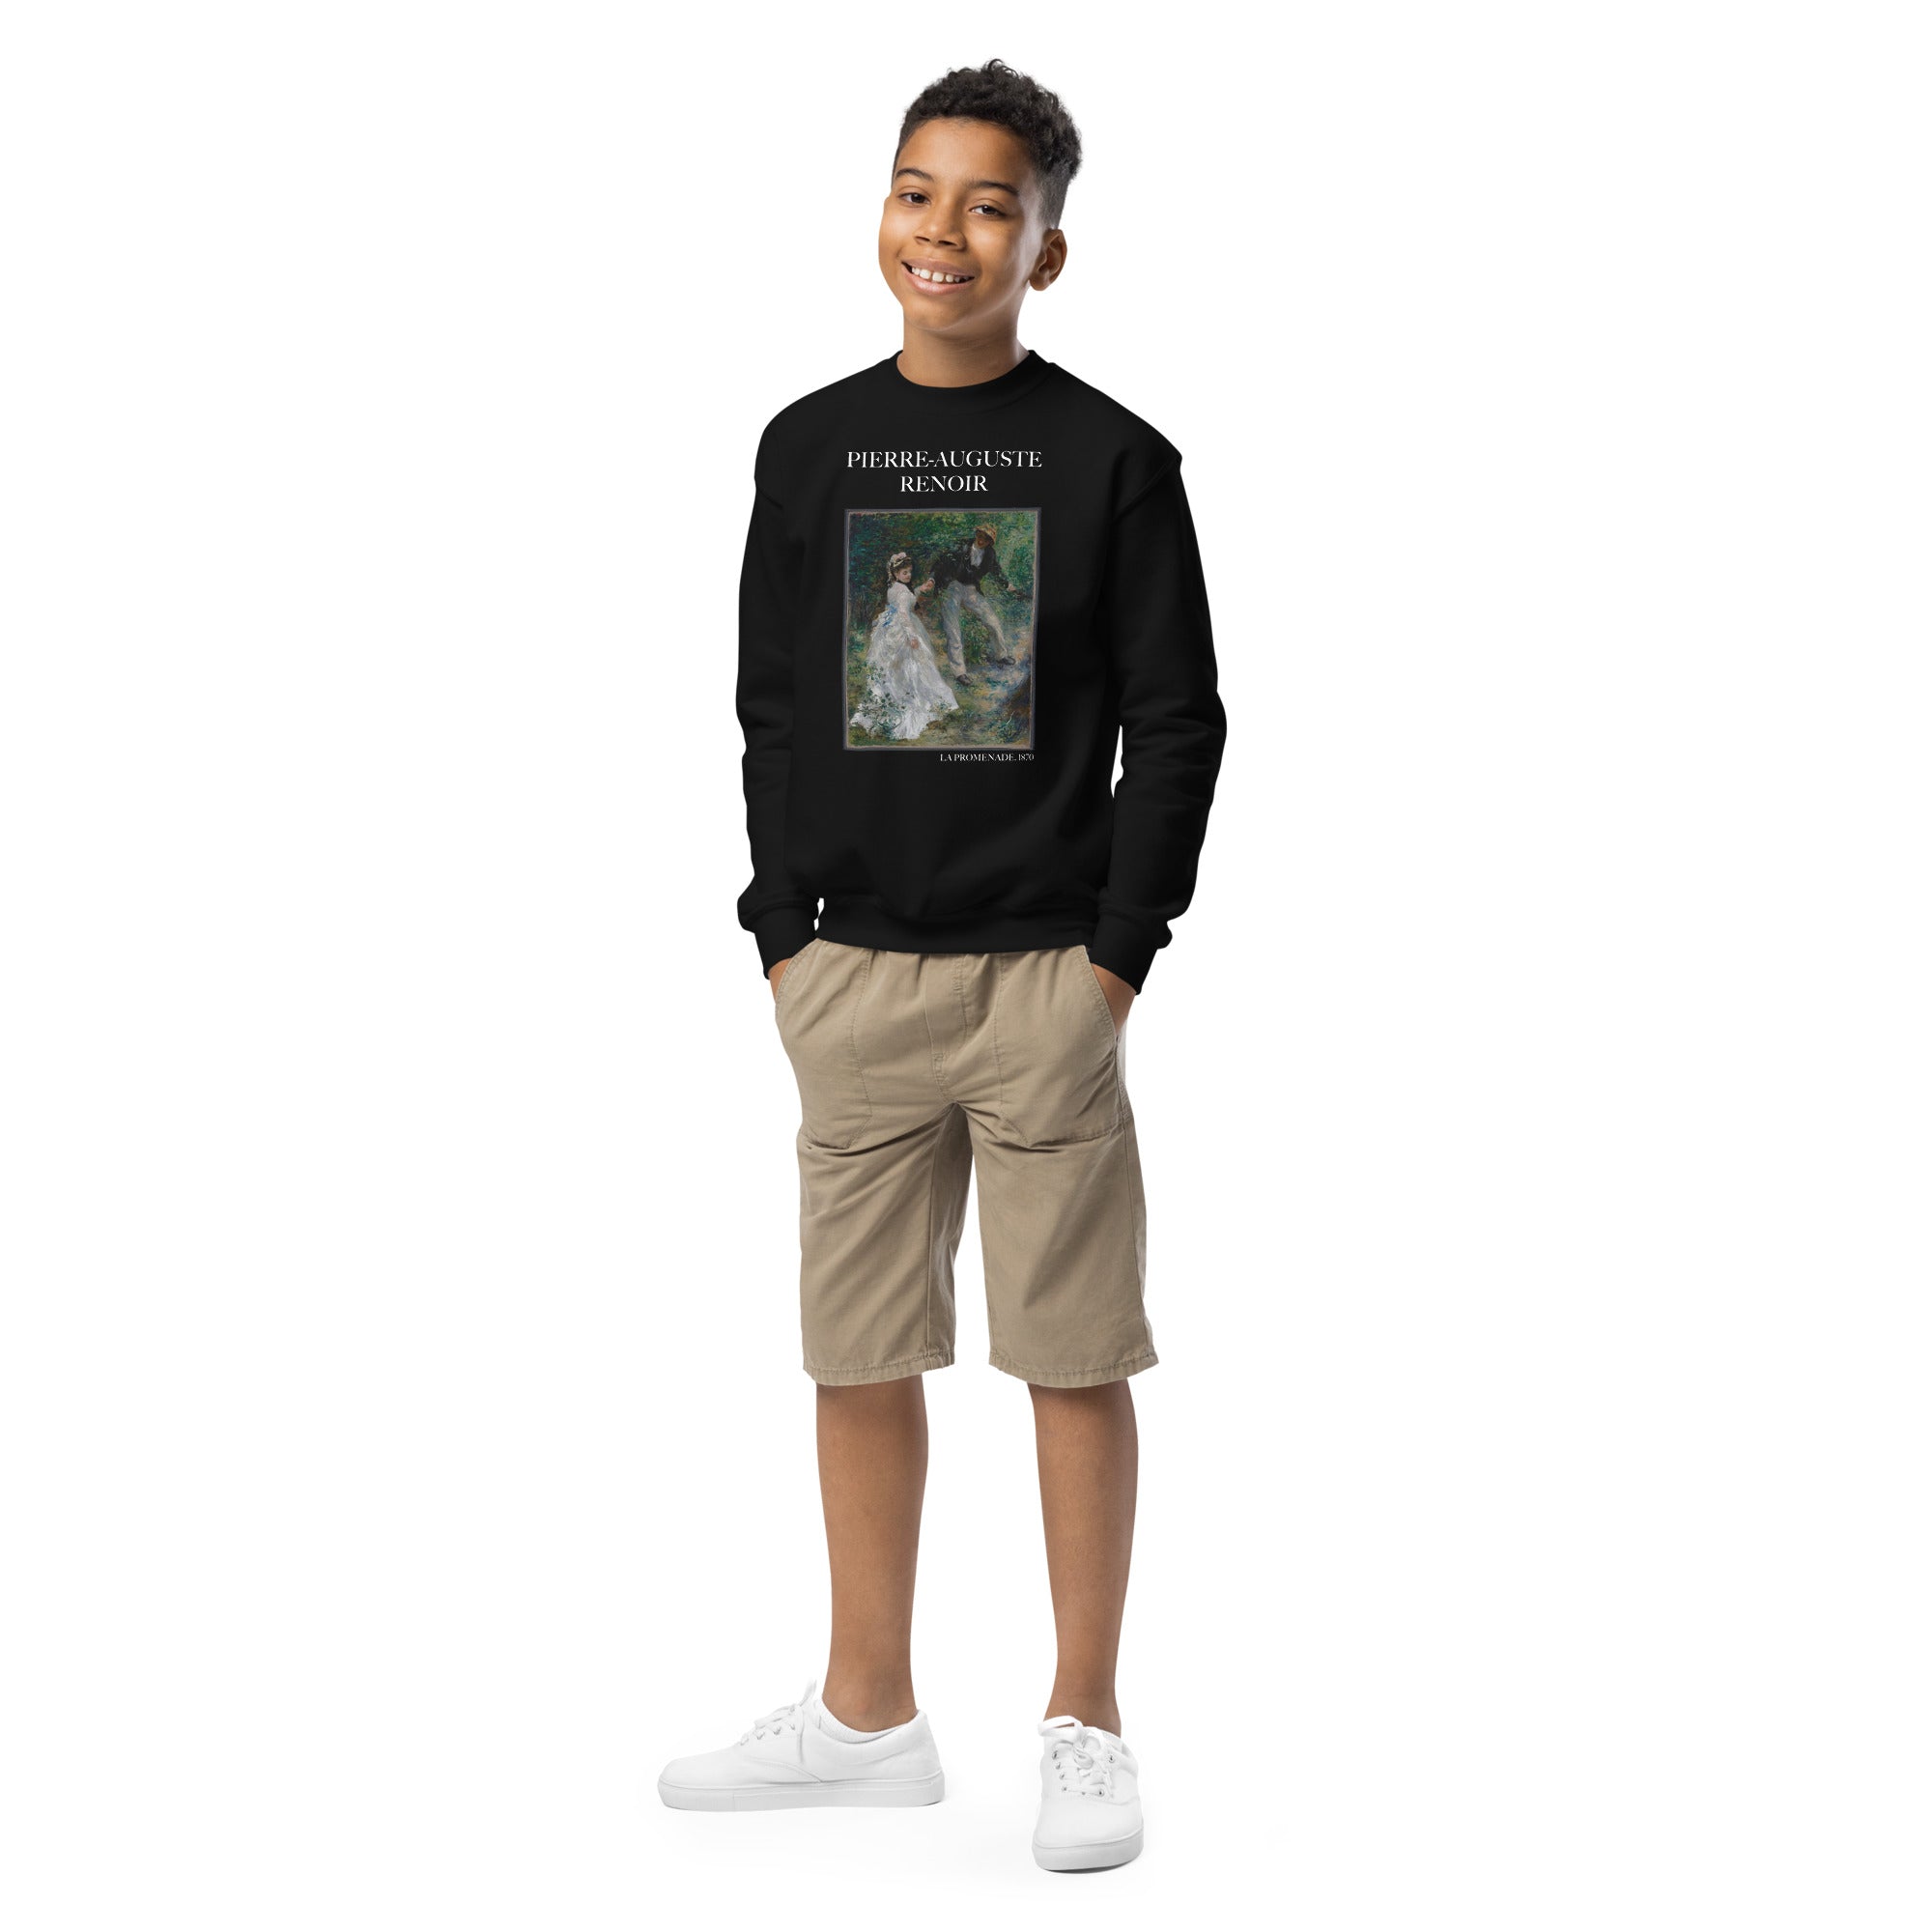 Pierre-Auguste Renoir 'La Promenade' Famous Painting Crewneck Sweatshirt | Premium Youth Art Sweatshirt